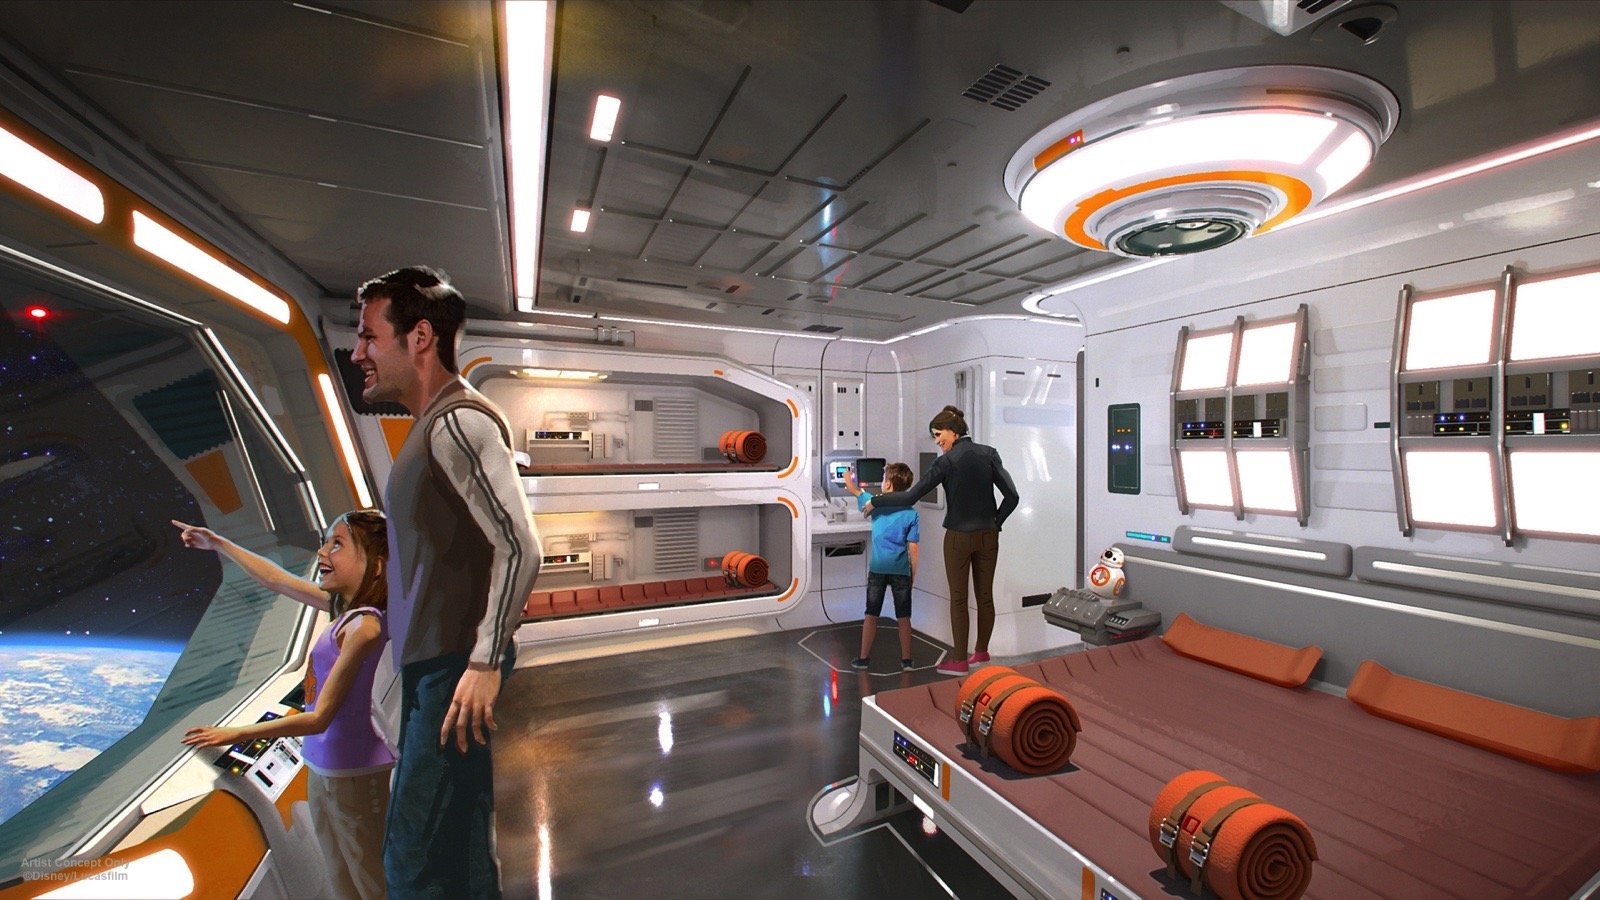 Disney's immersive 'Star Wars' hotel is a Jedi dream come true | DeviceDaily.com